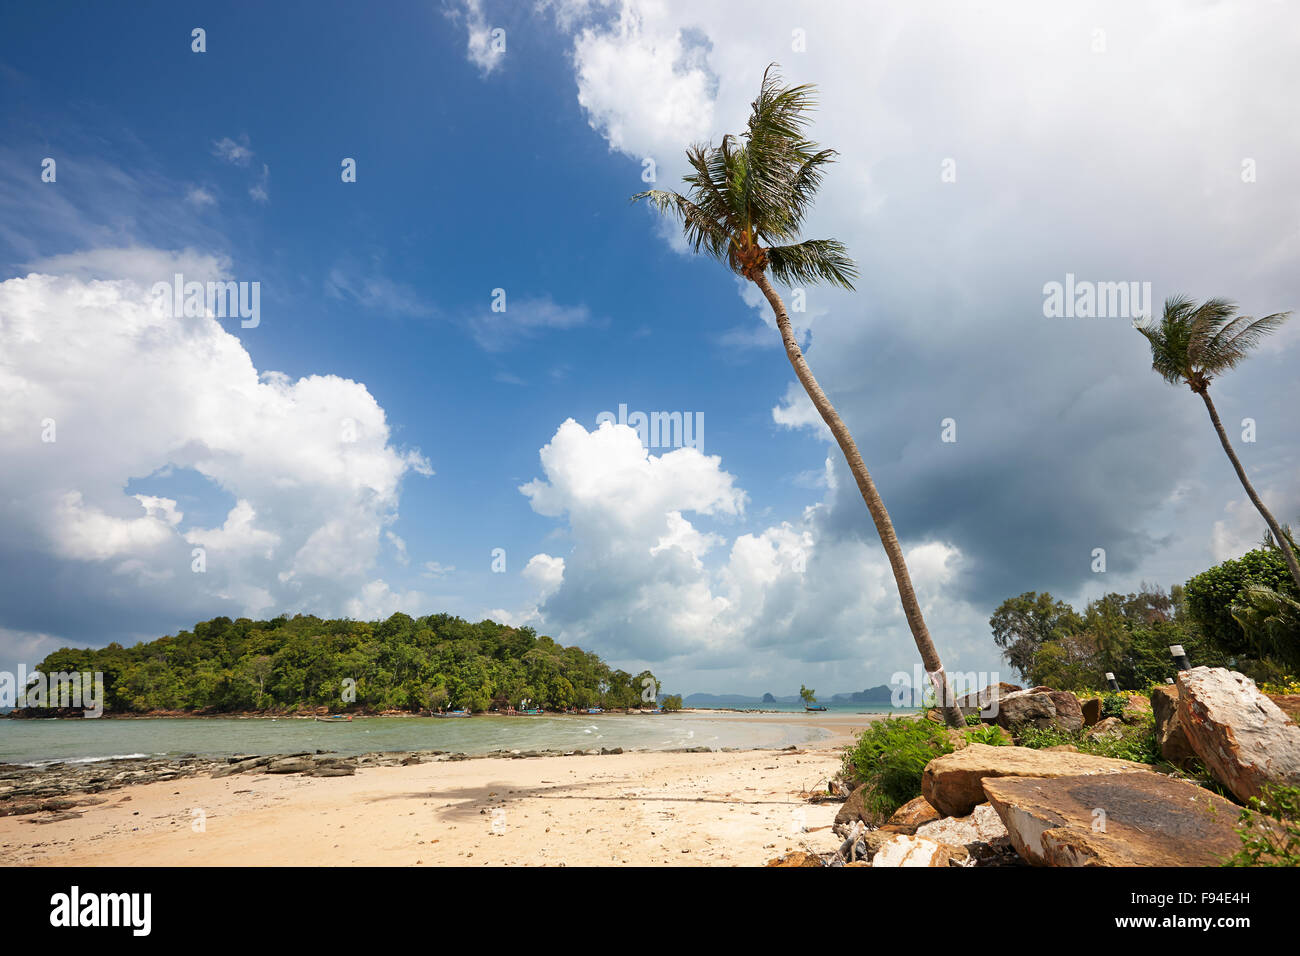 Klong Muang Beach, province de Krabi, Thaïlande. Banque D'Images